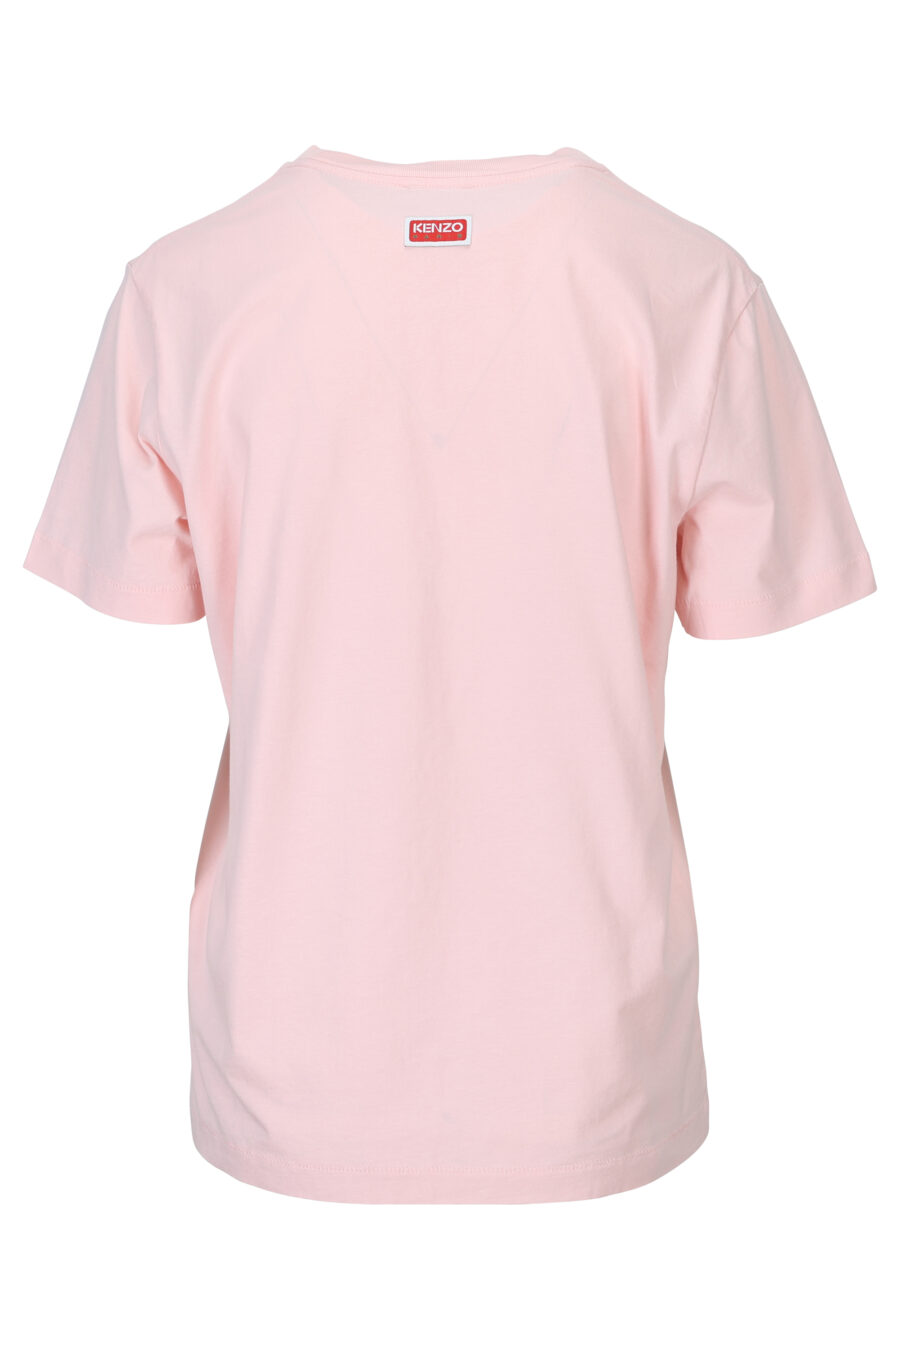 Pink T-shirt with "boke flower" maxilogo - 3612230483163 1